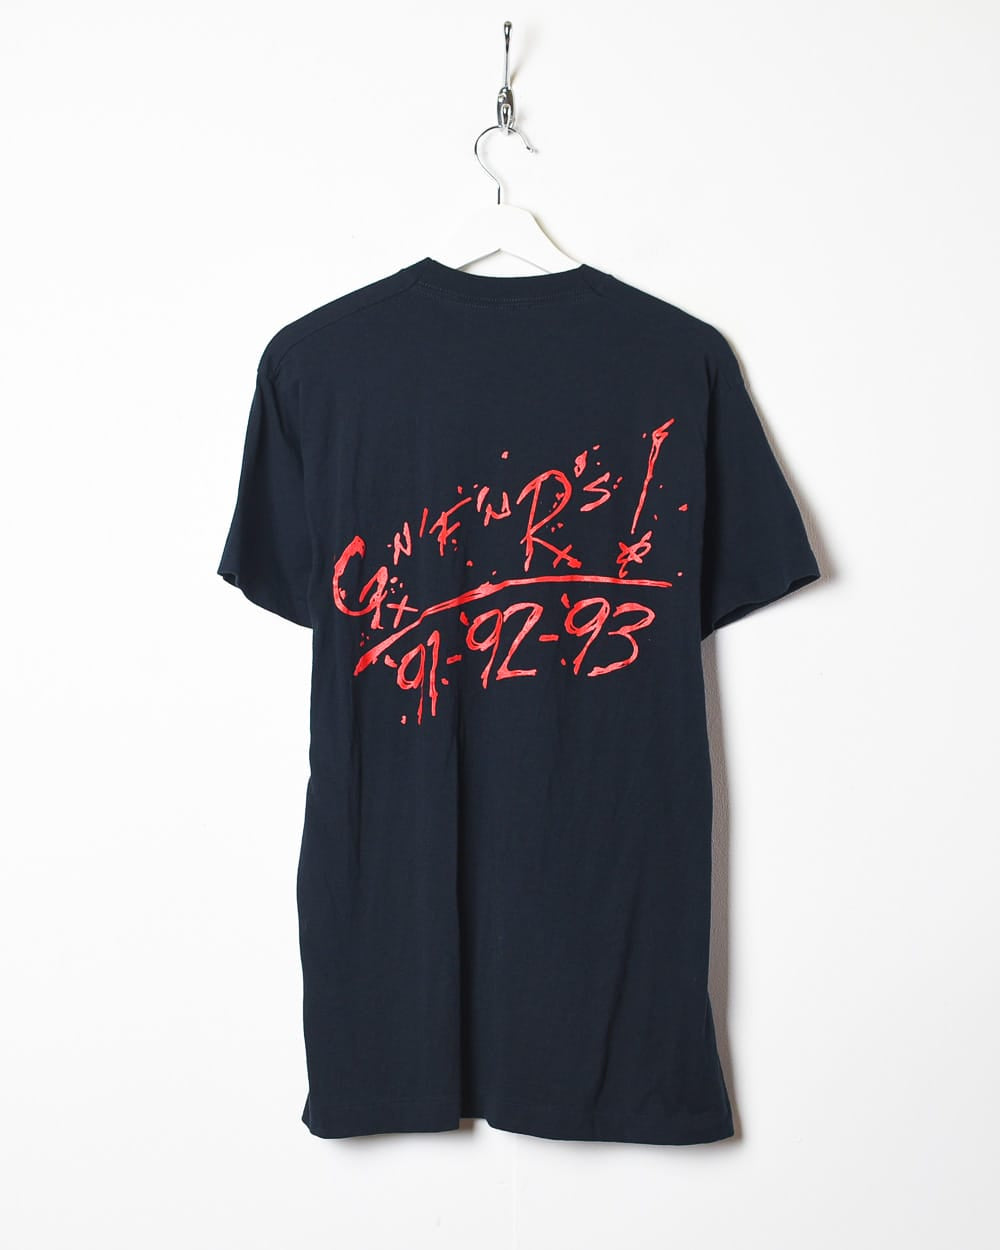 Black Guns N' Roses Graphic T-Shirt - Large